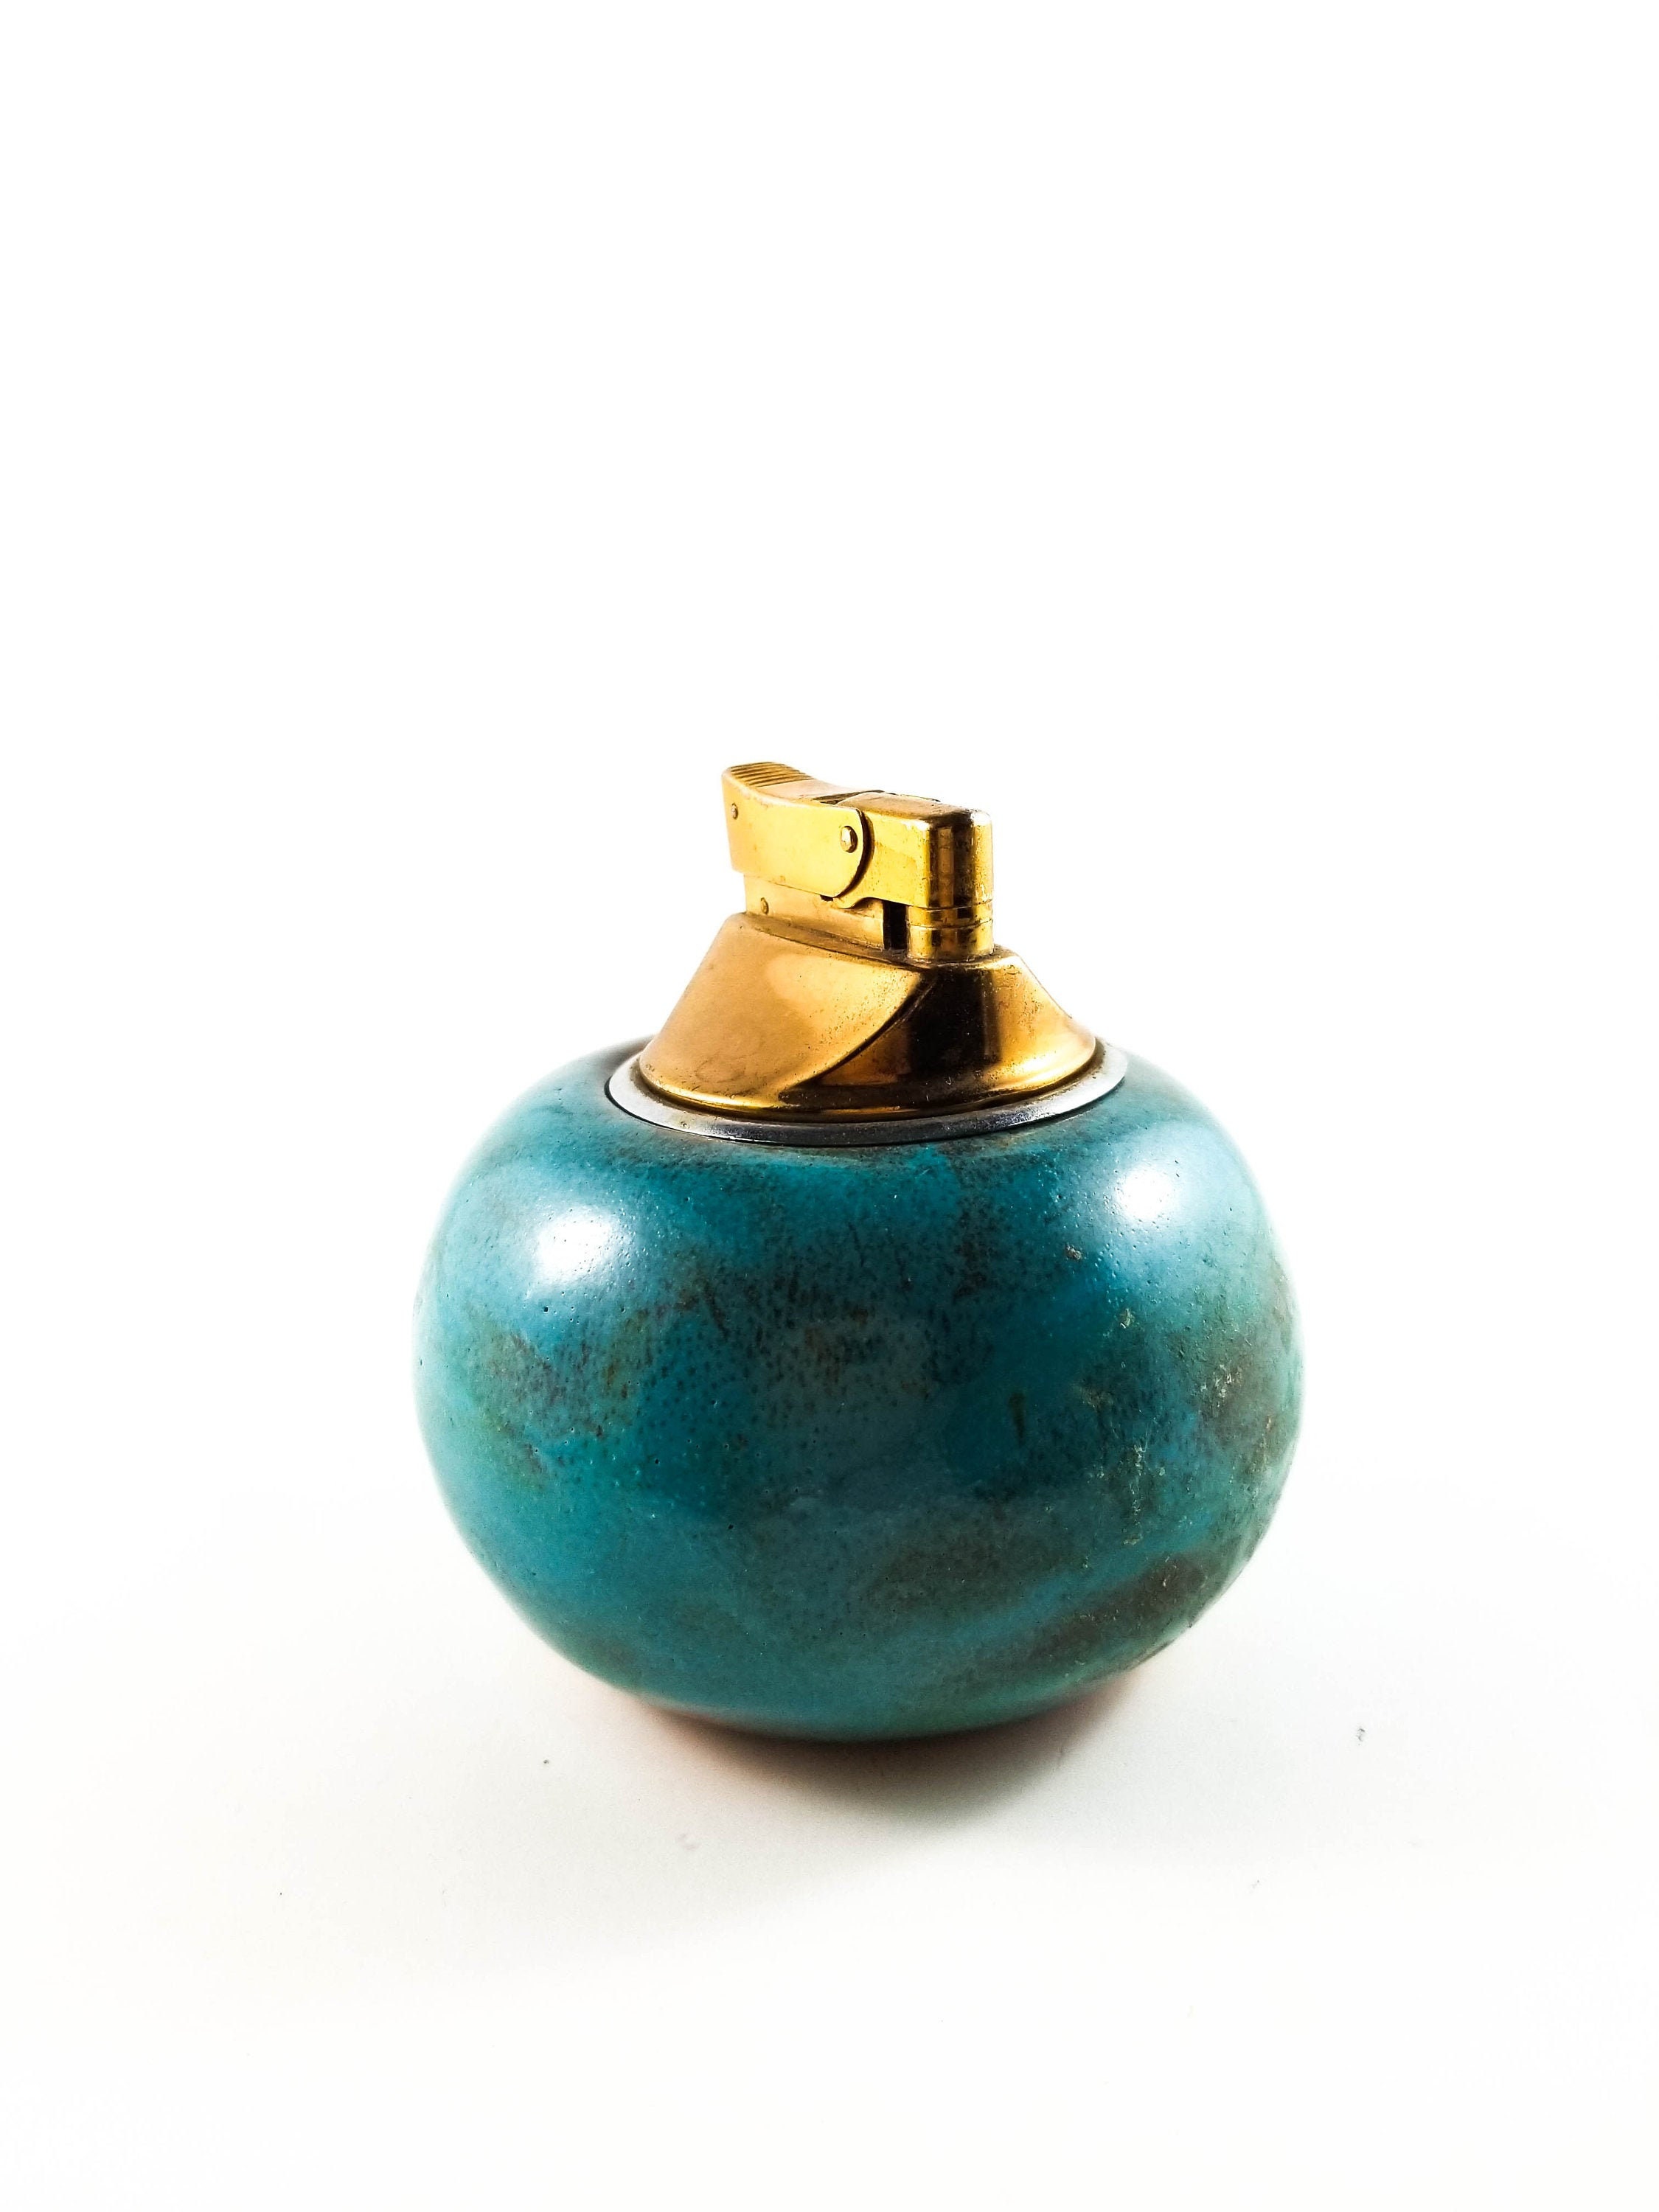 Beautiful Round Ceramic and Brass Vintage Lighter